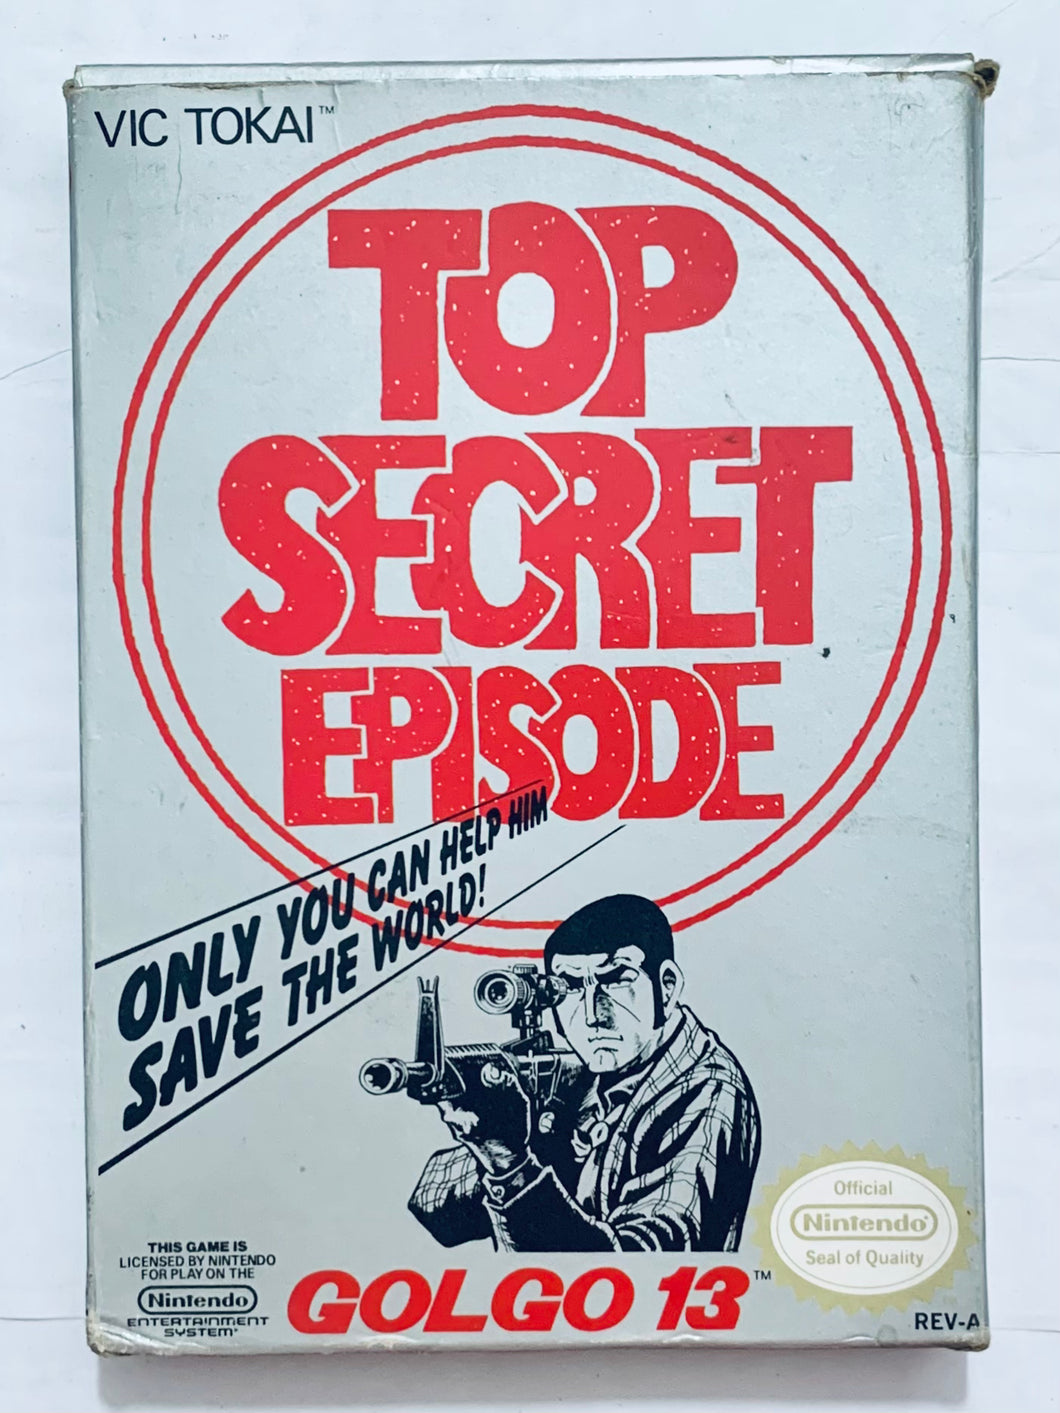 Golgo 13: Top Secret Episode - Nintendo Entertainment System - NES - NTSC-US - Boxed (NES-G3-USA)